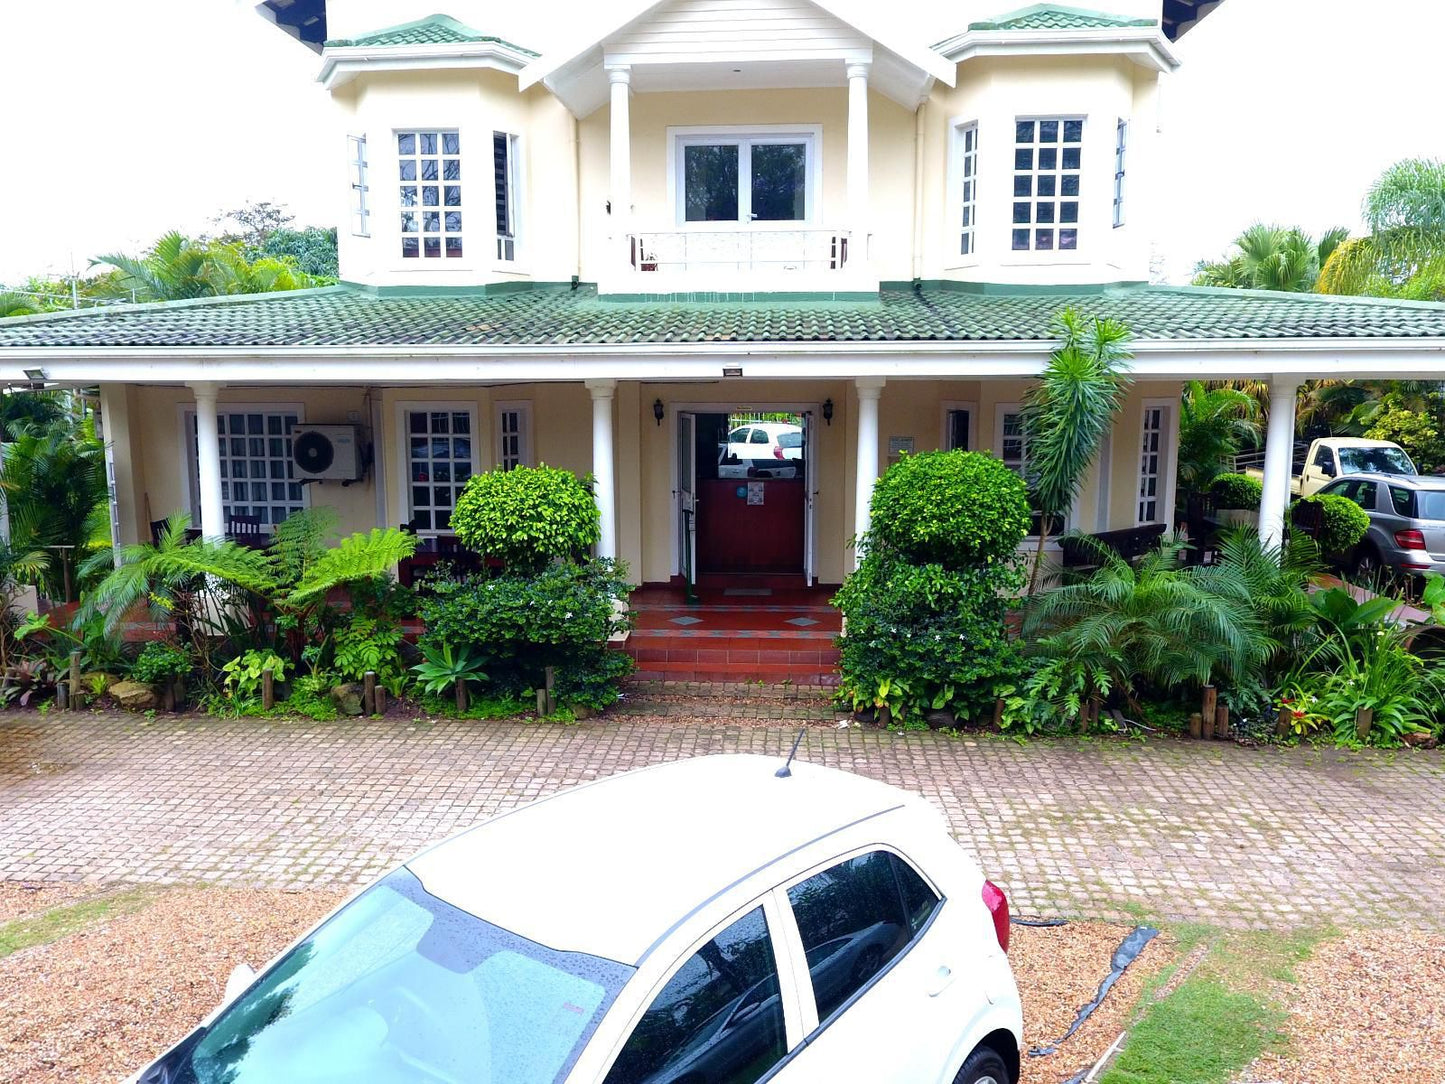 Gumtree Lodge Mount Edgecombe Durban Kwazulu Natal South Africa Building, Architecture, House, Car, Vehicle